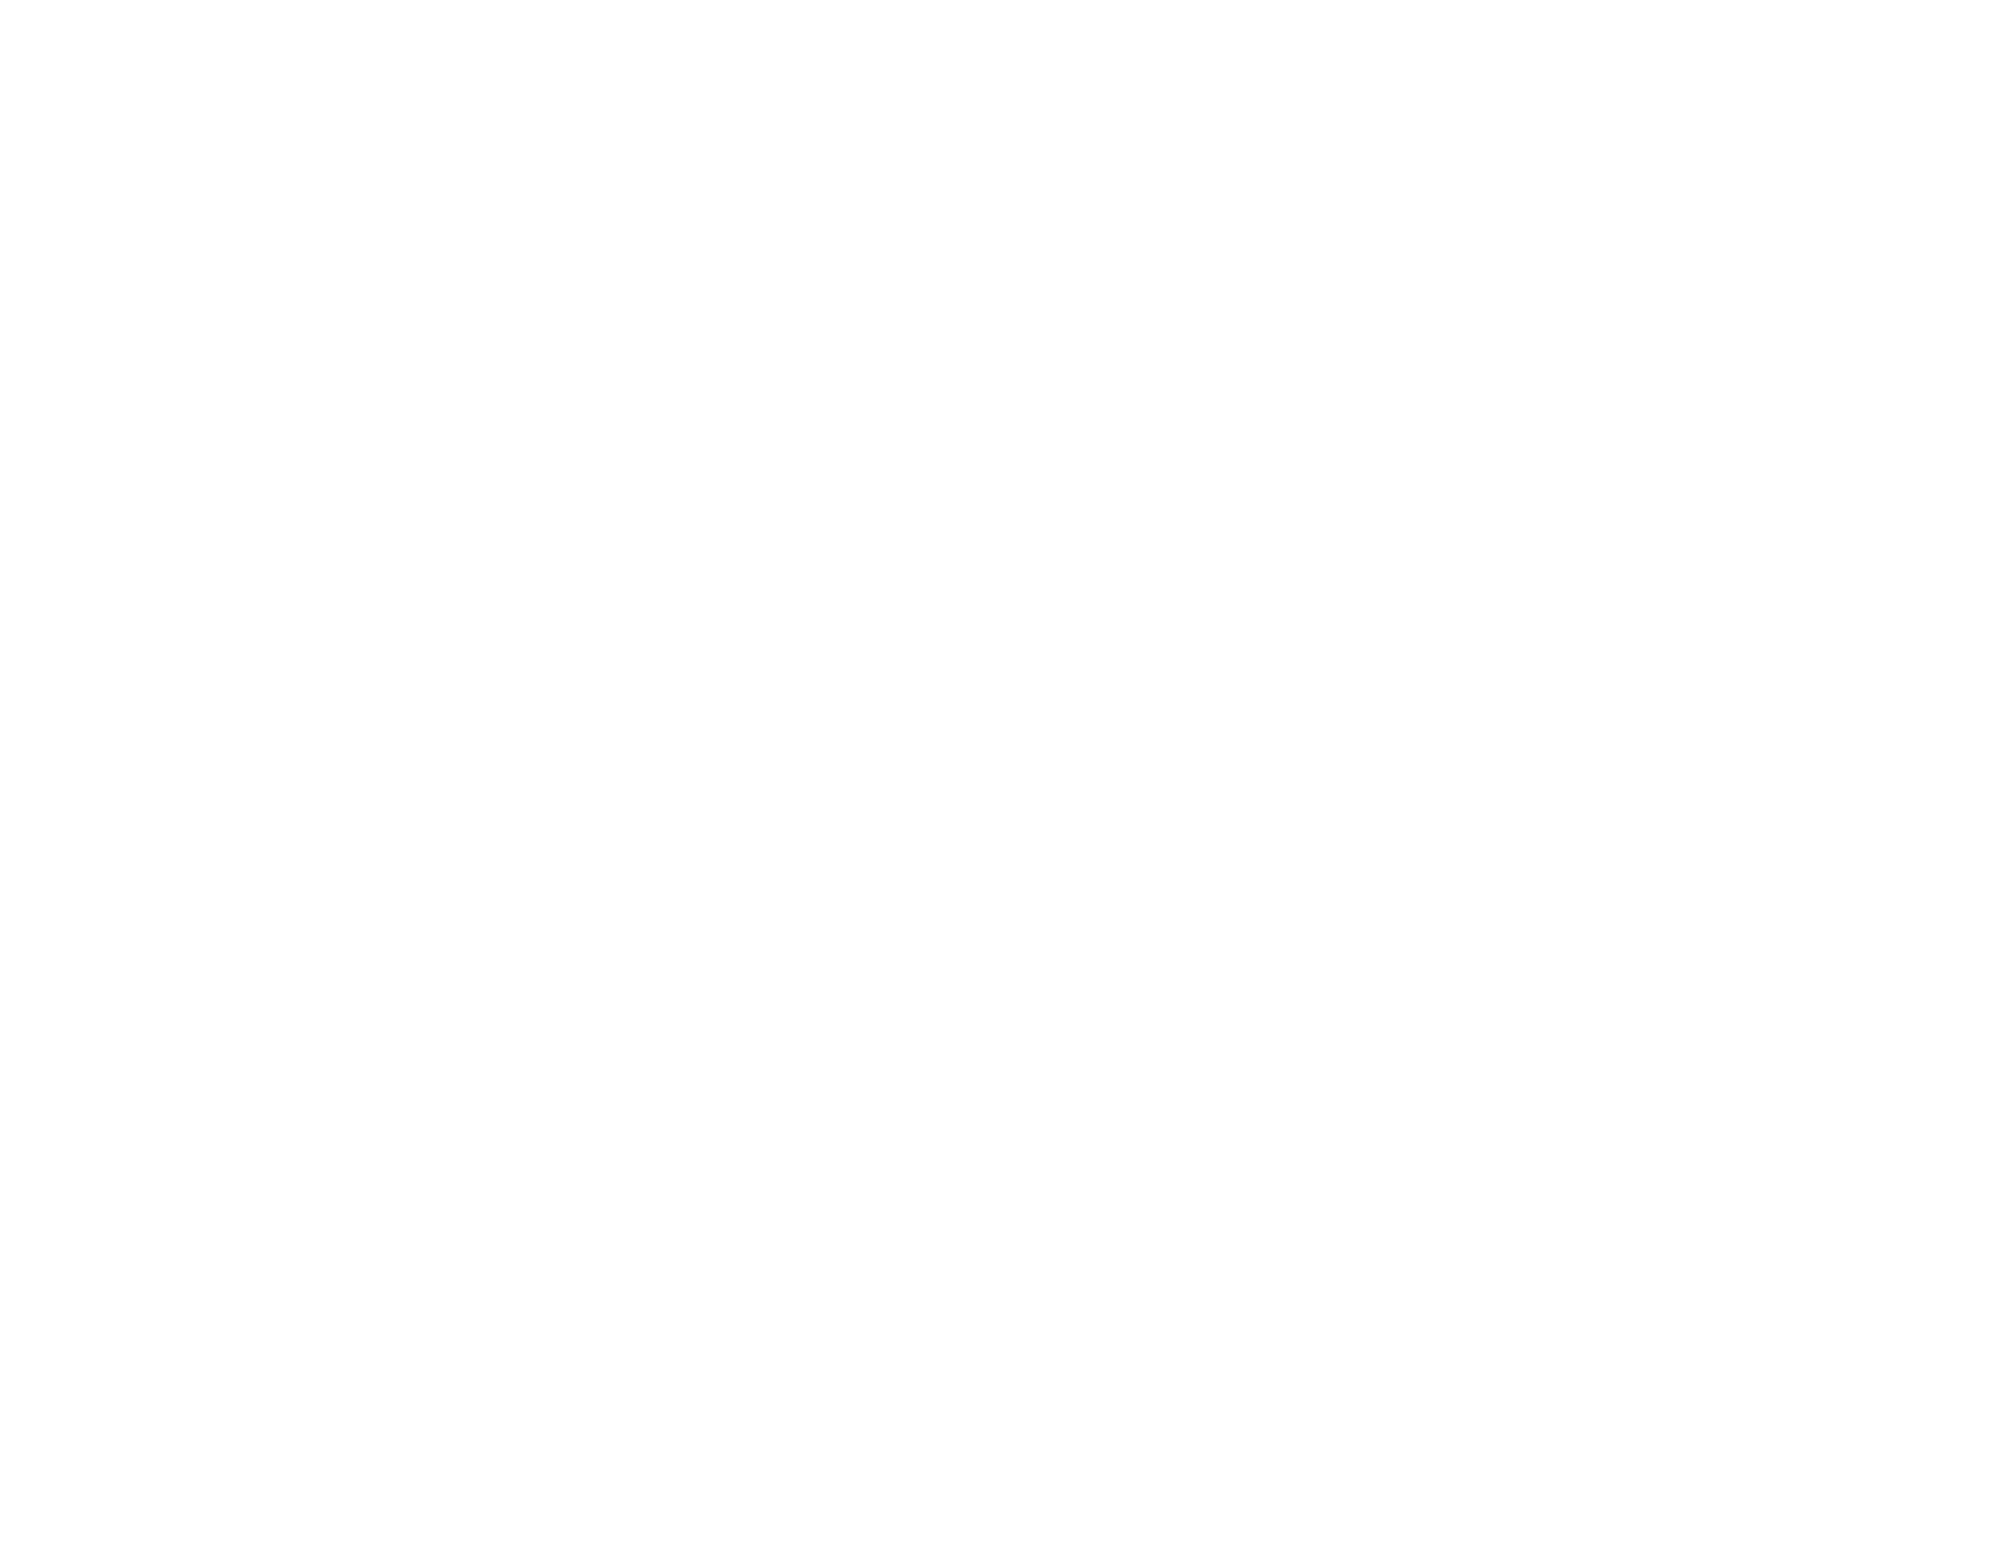 CDKI Dining